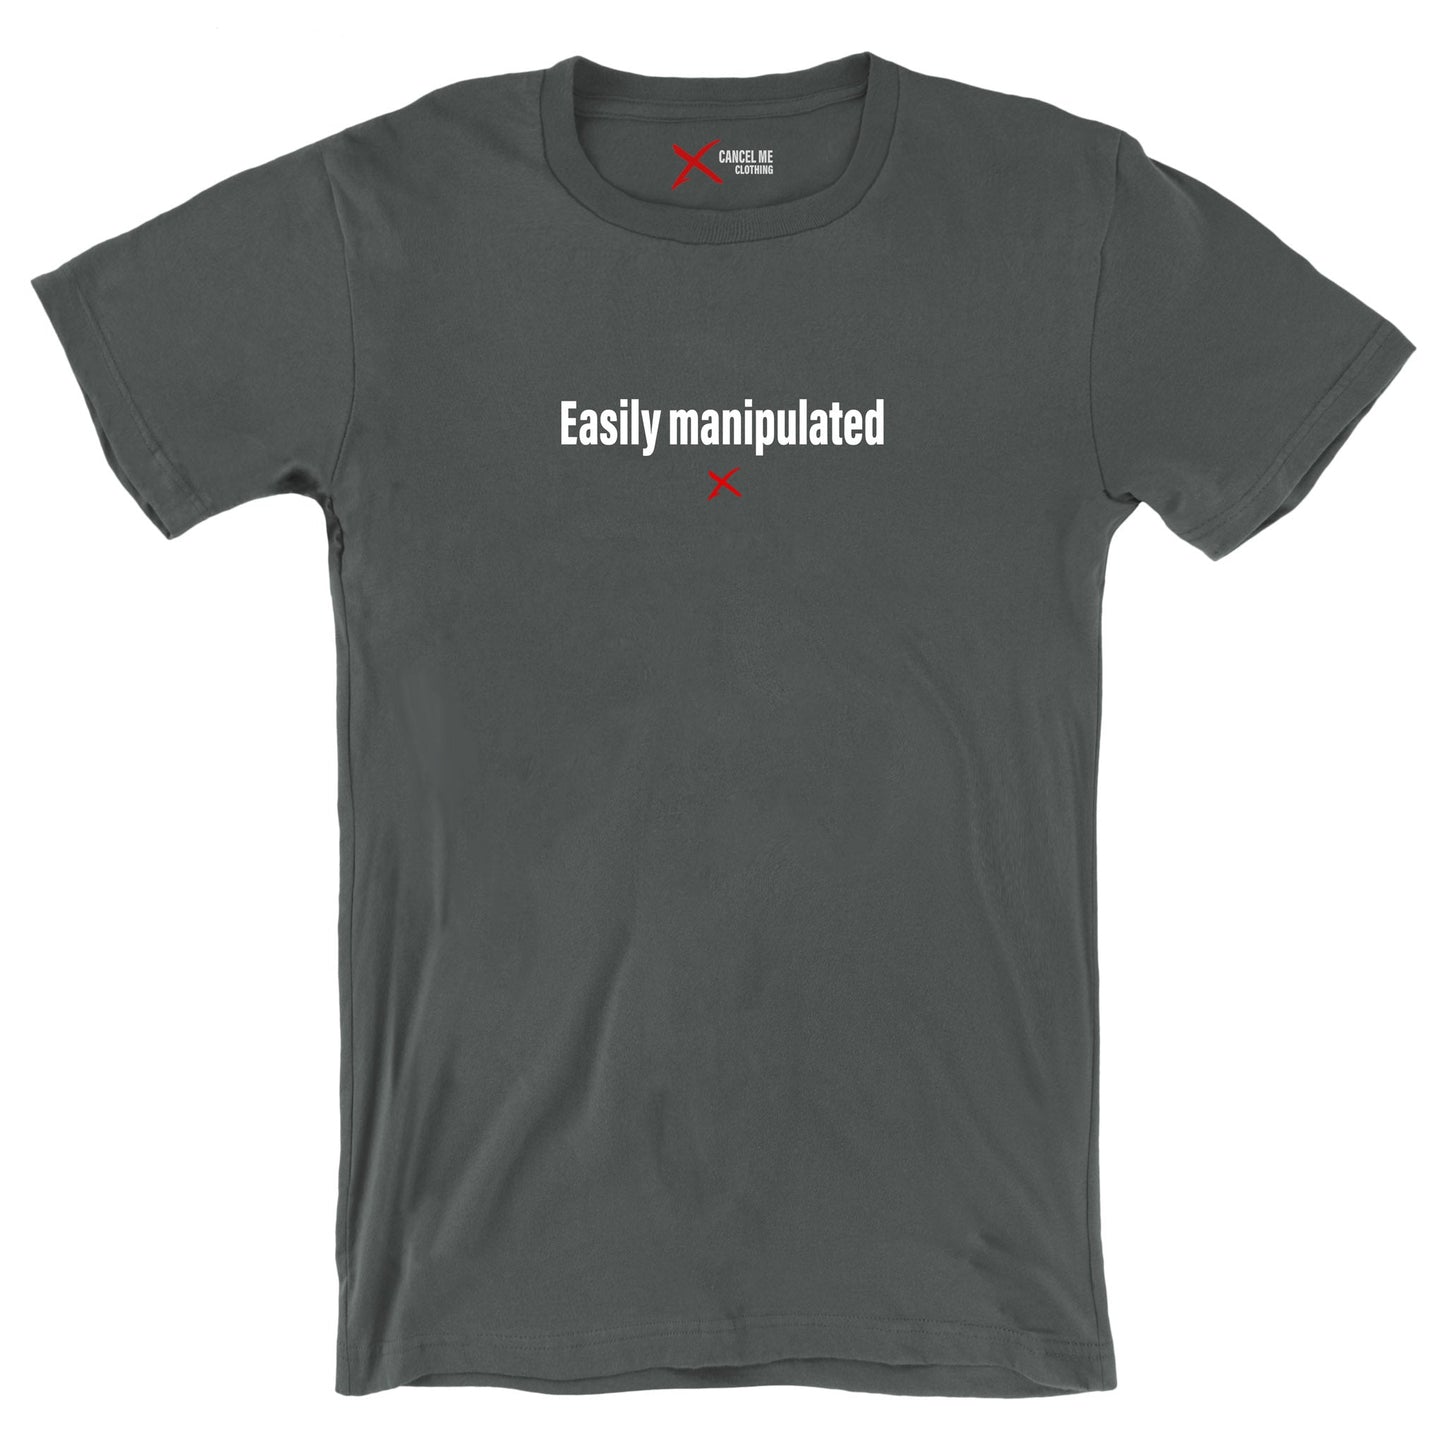 Easily manipulated - Shirt